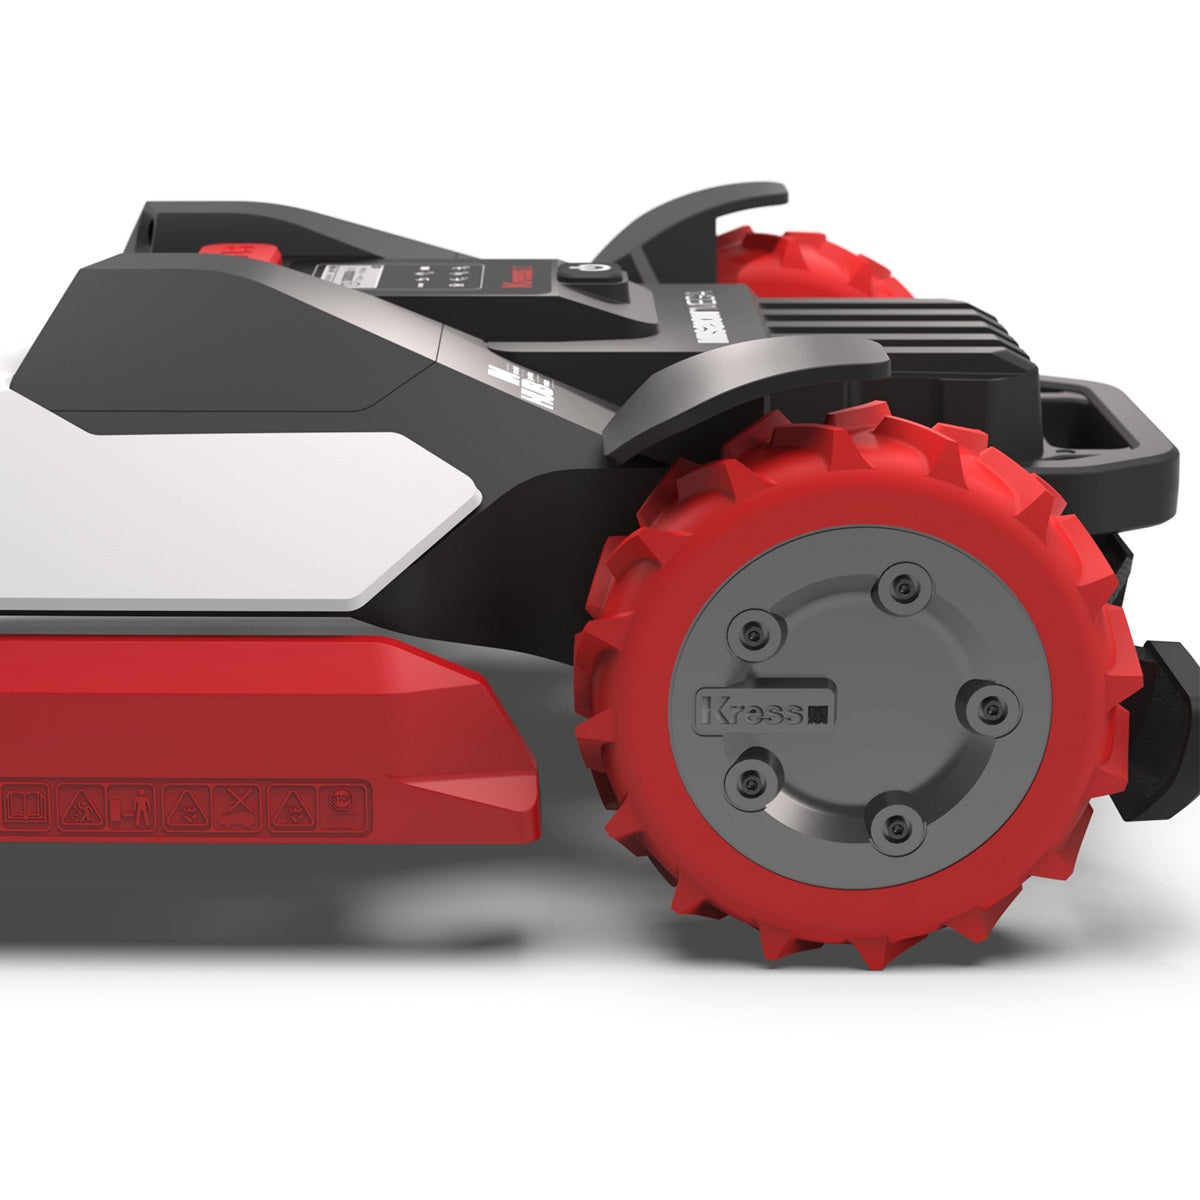 Kress KR133E Mega Robot Lawnmower, 3000m2